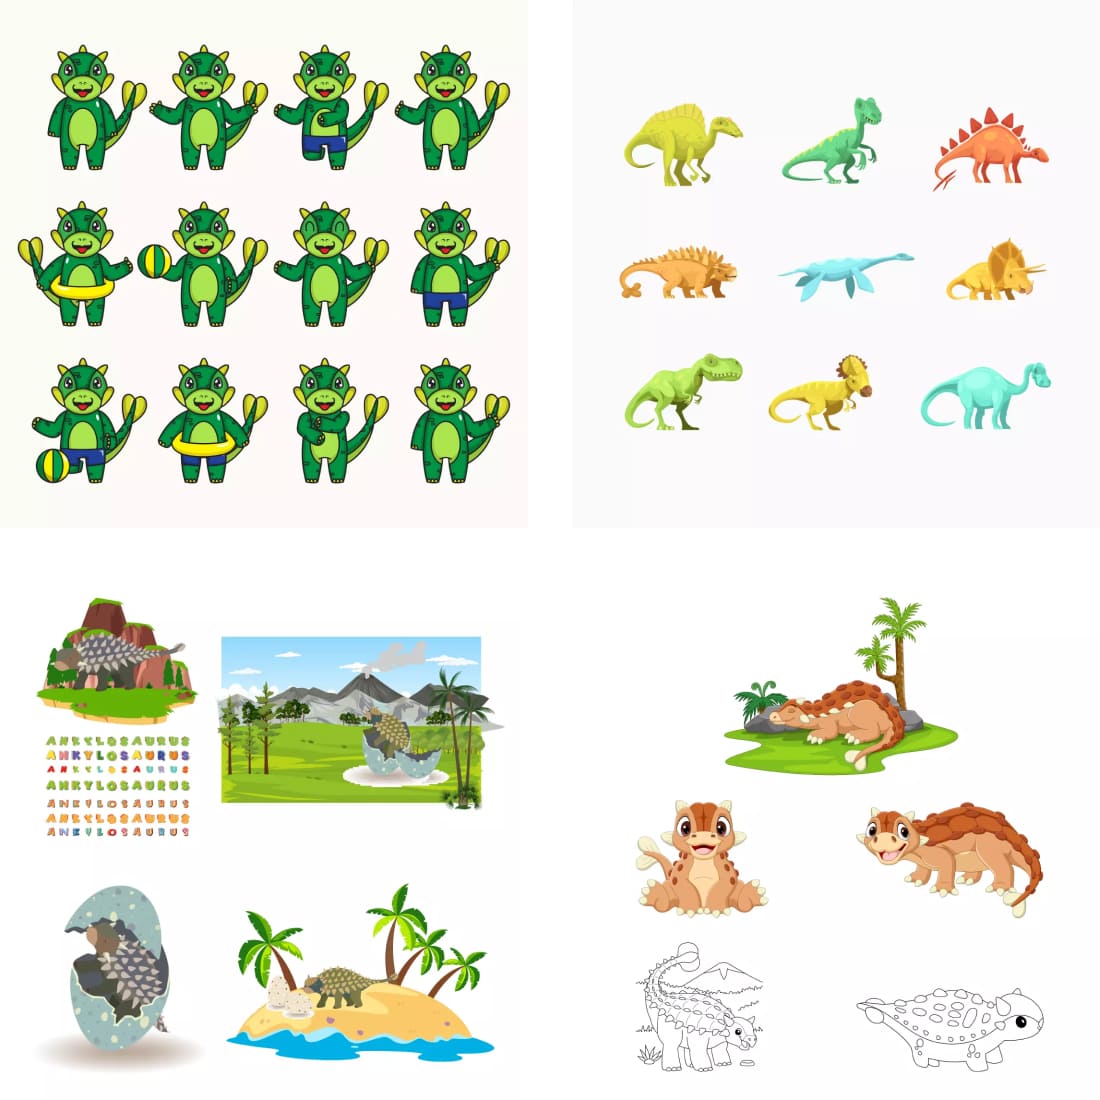 Variety of cartoon animals and plants.